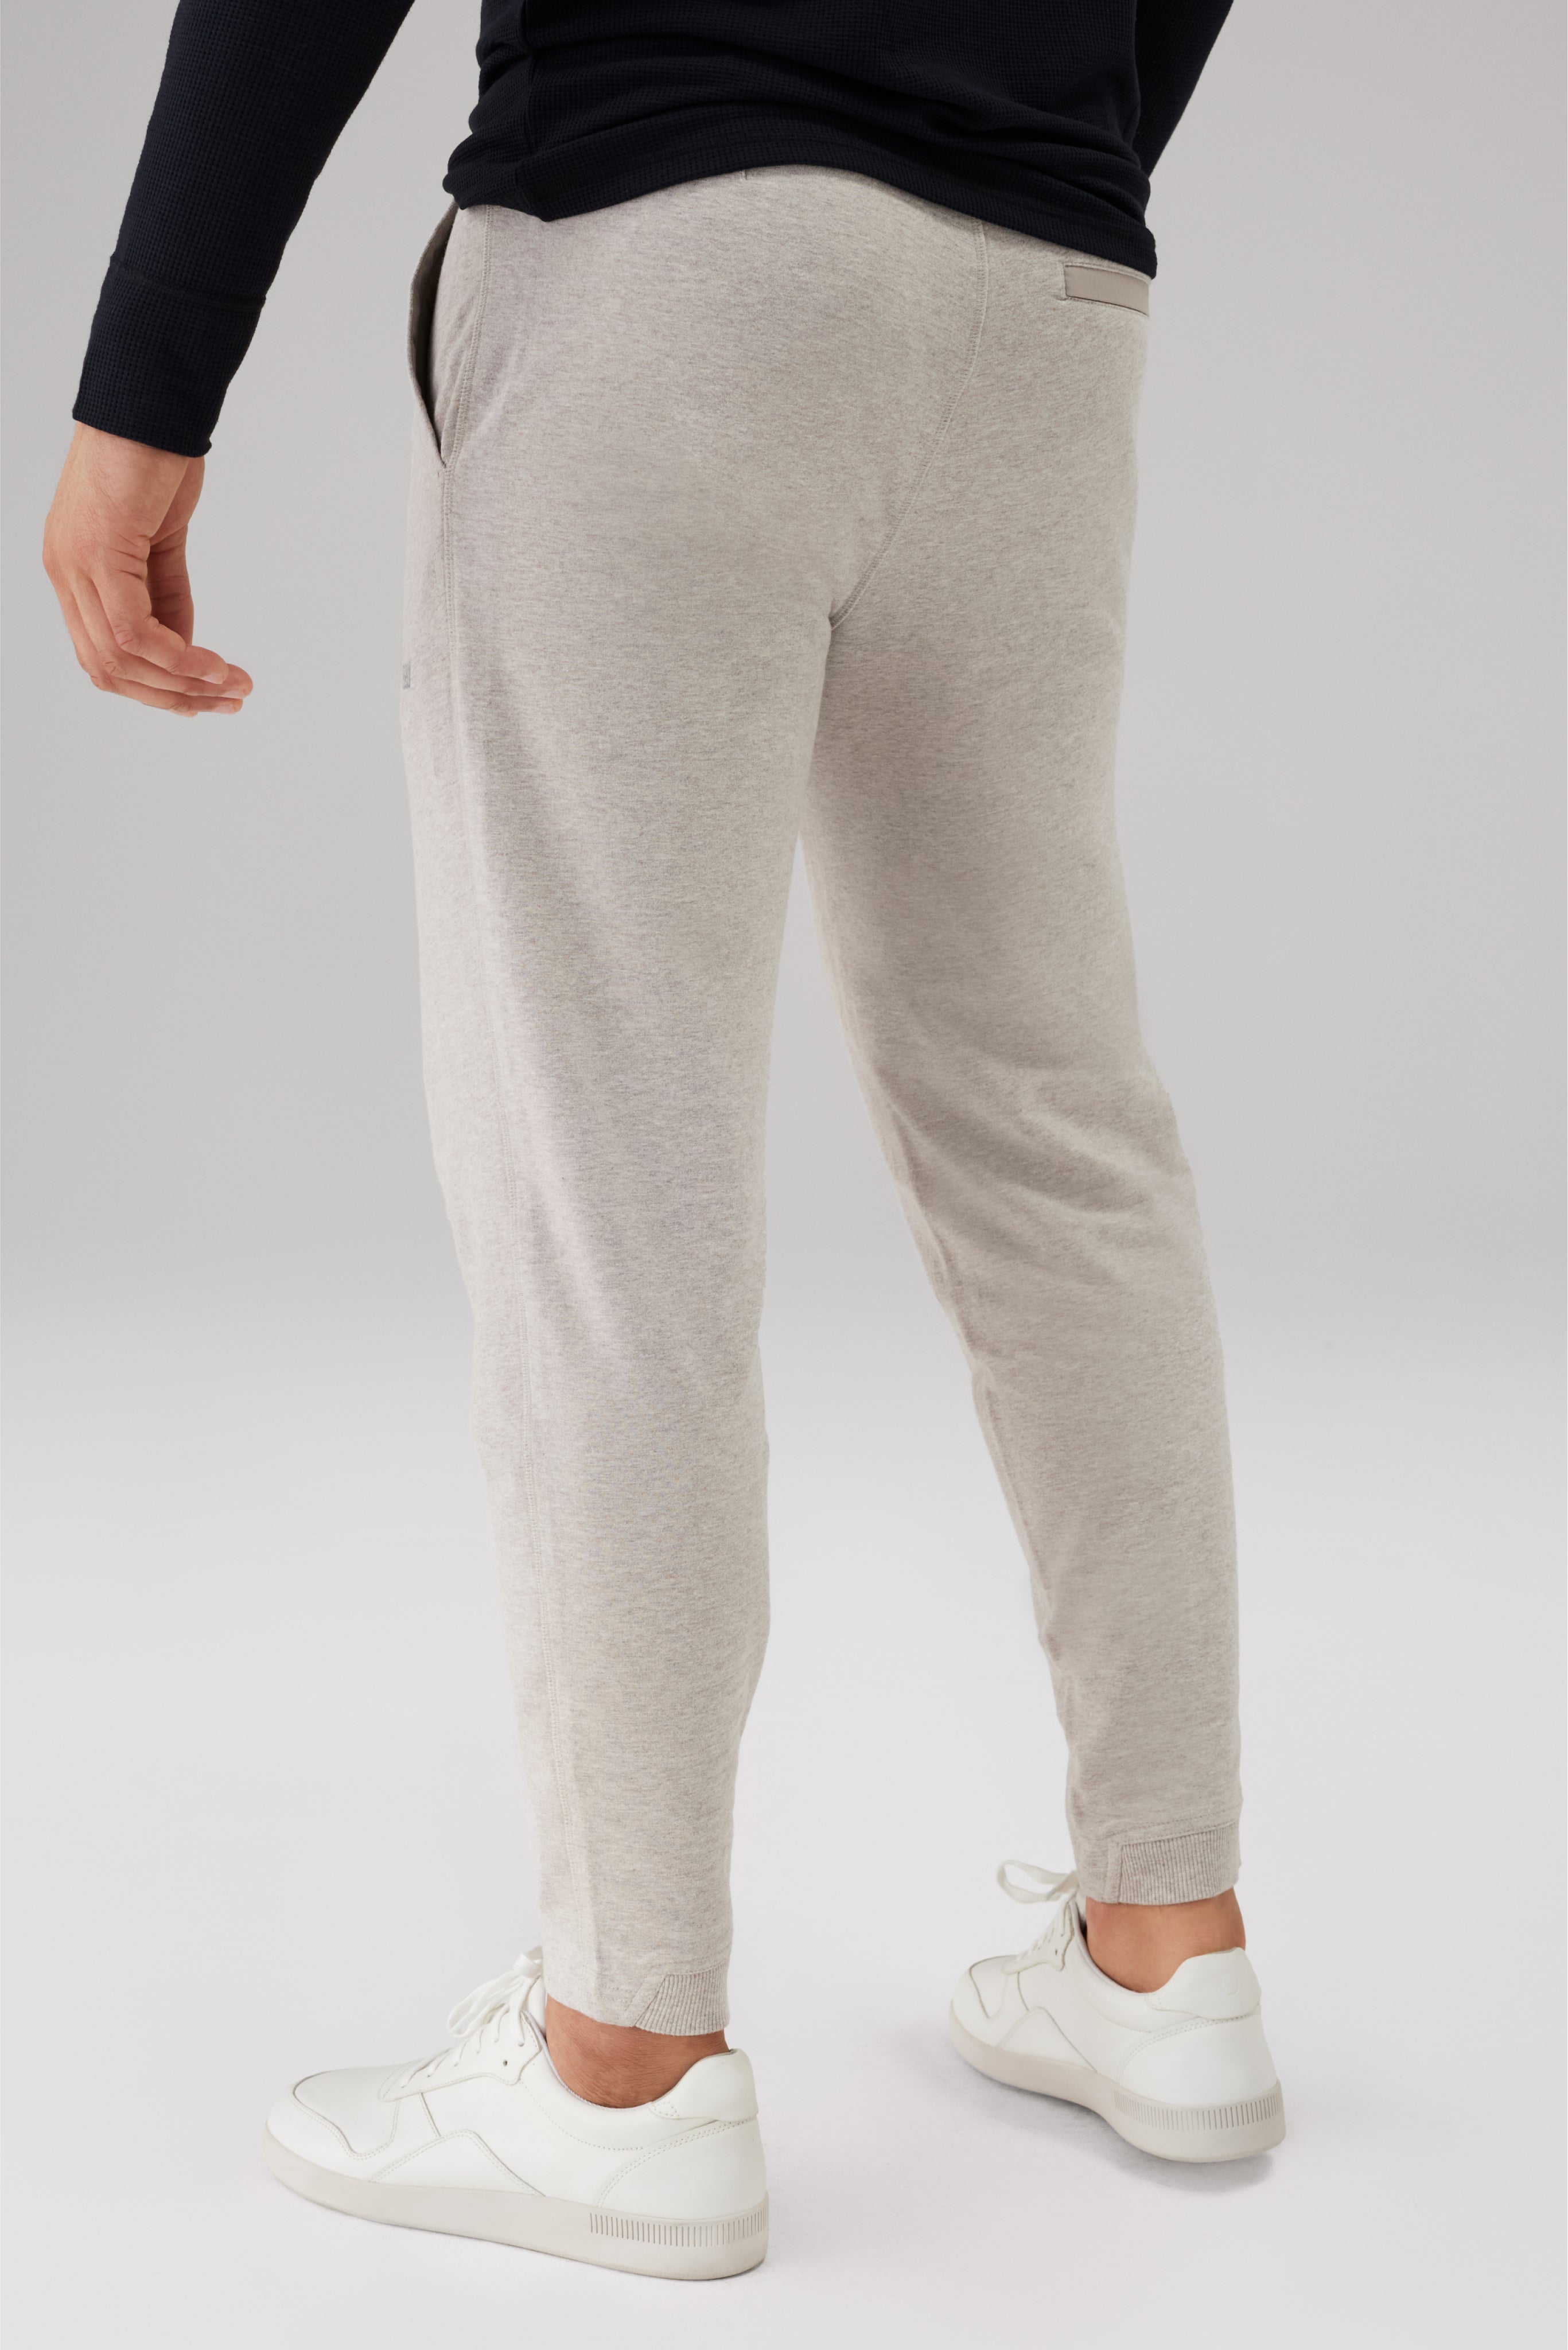 Sweatpants For Men & Women (Under $10)